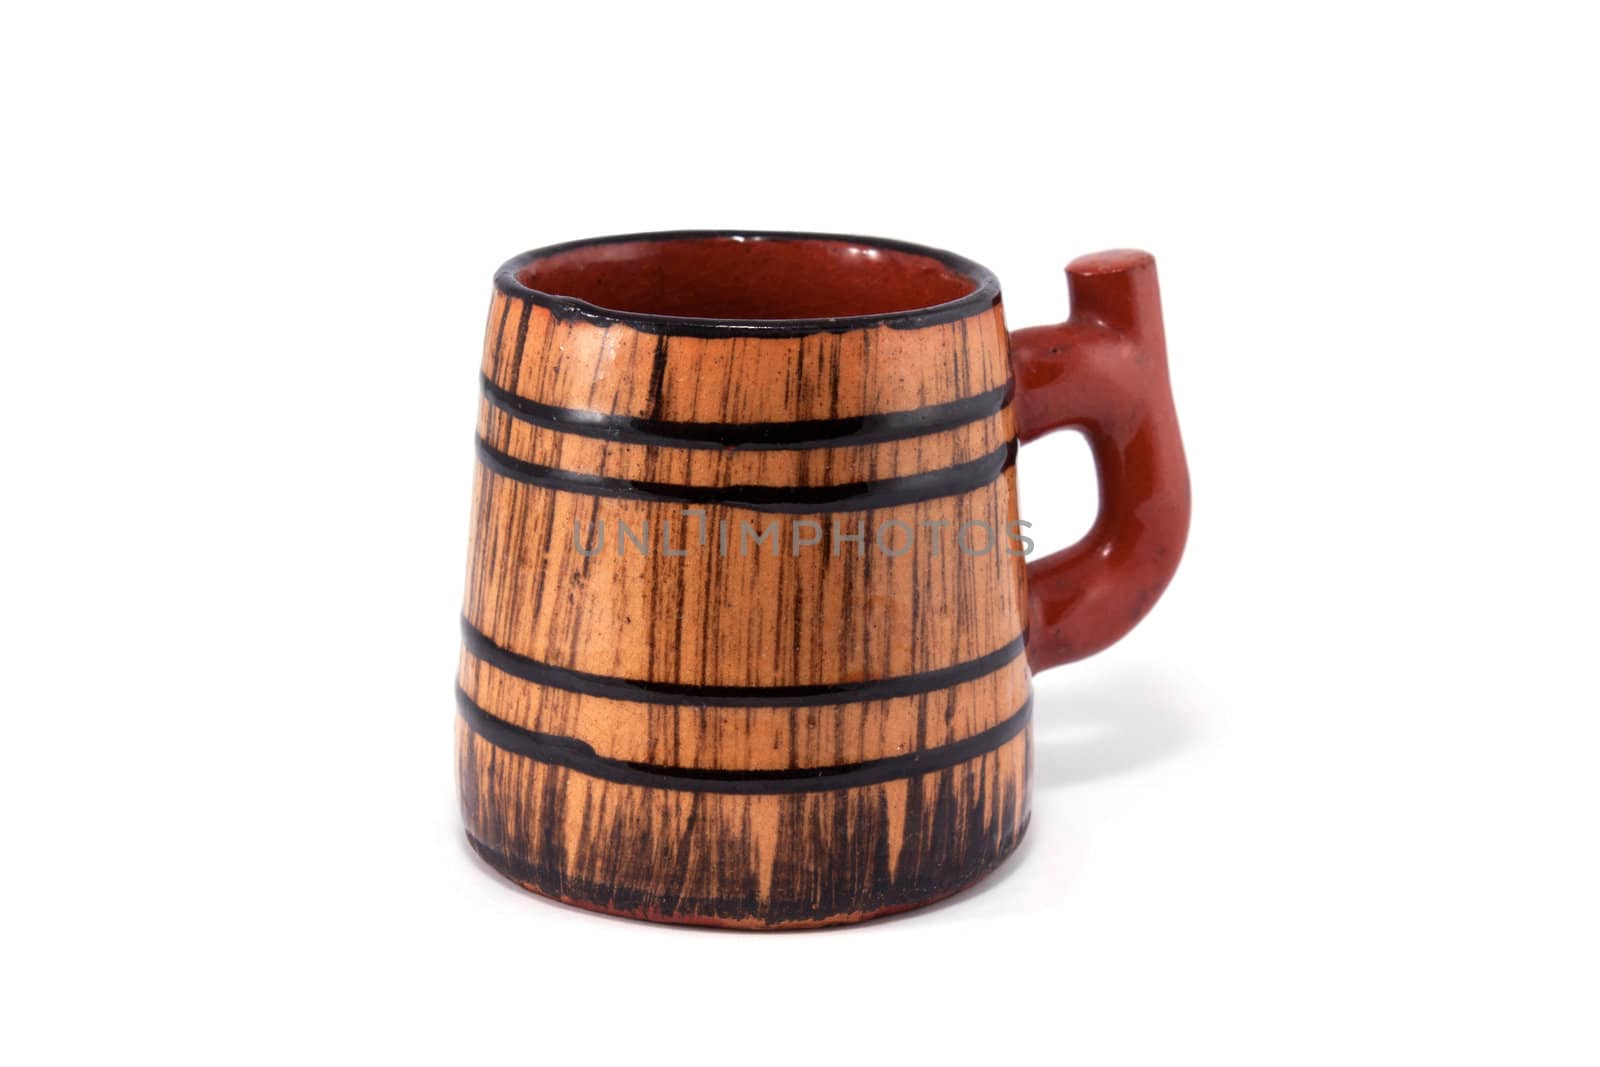 Old pub ceramic mug